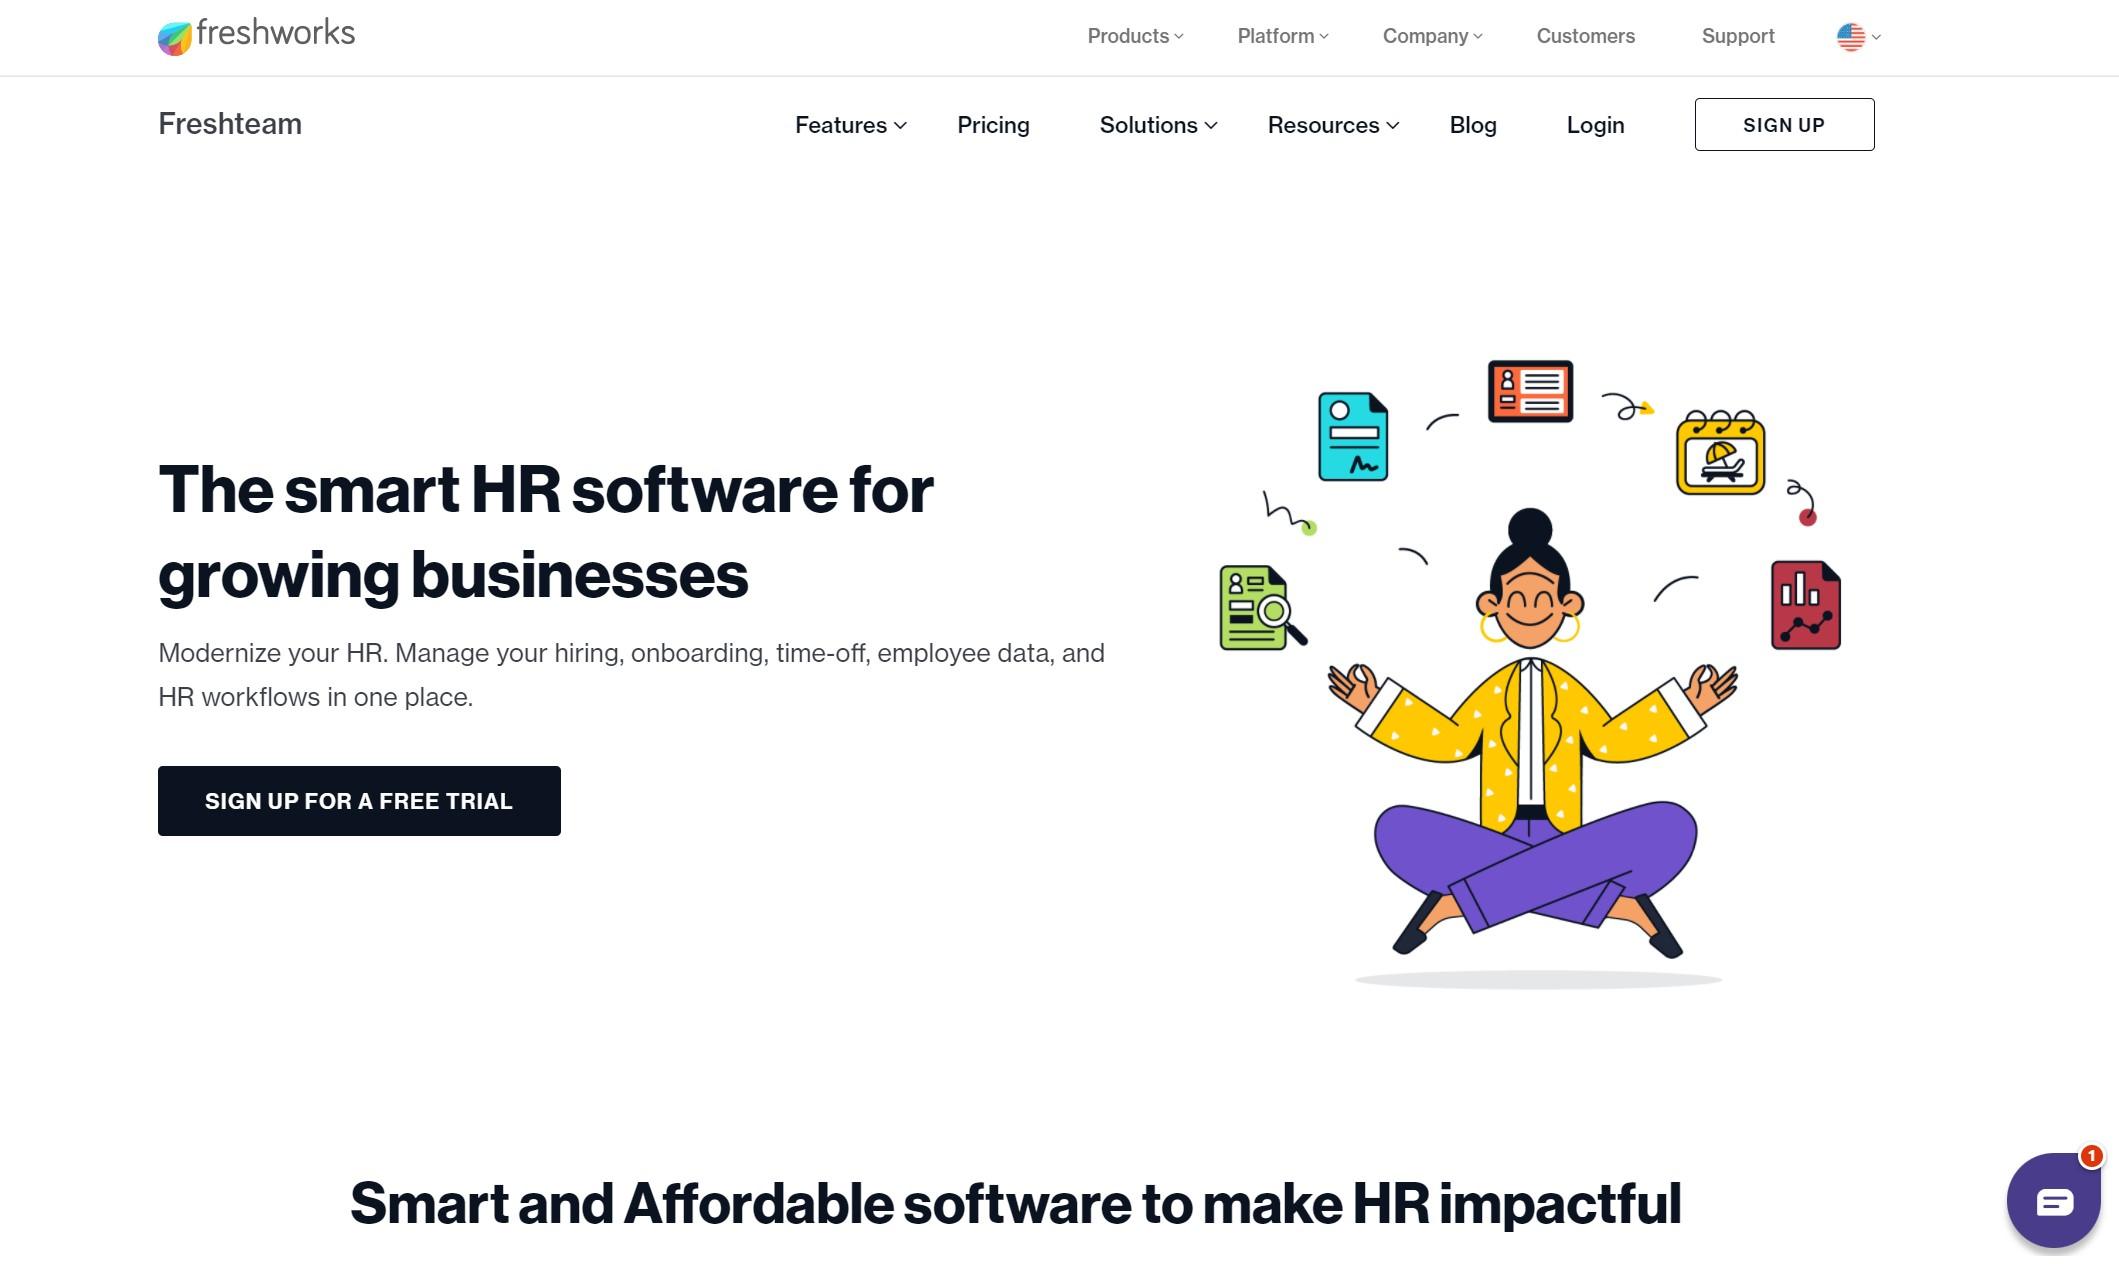 Review Freshteam: The smart HR Software for growing businesses - Appvizer